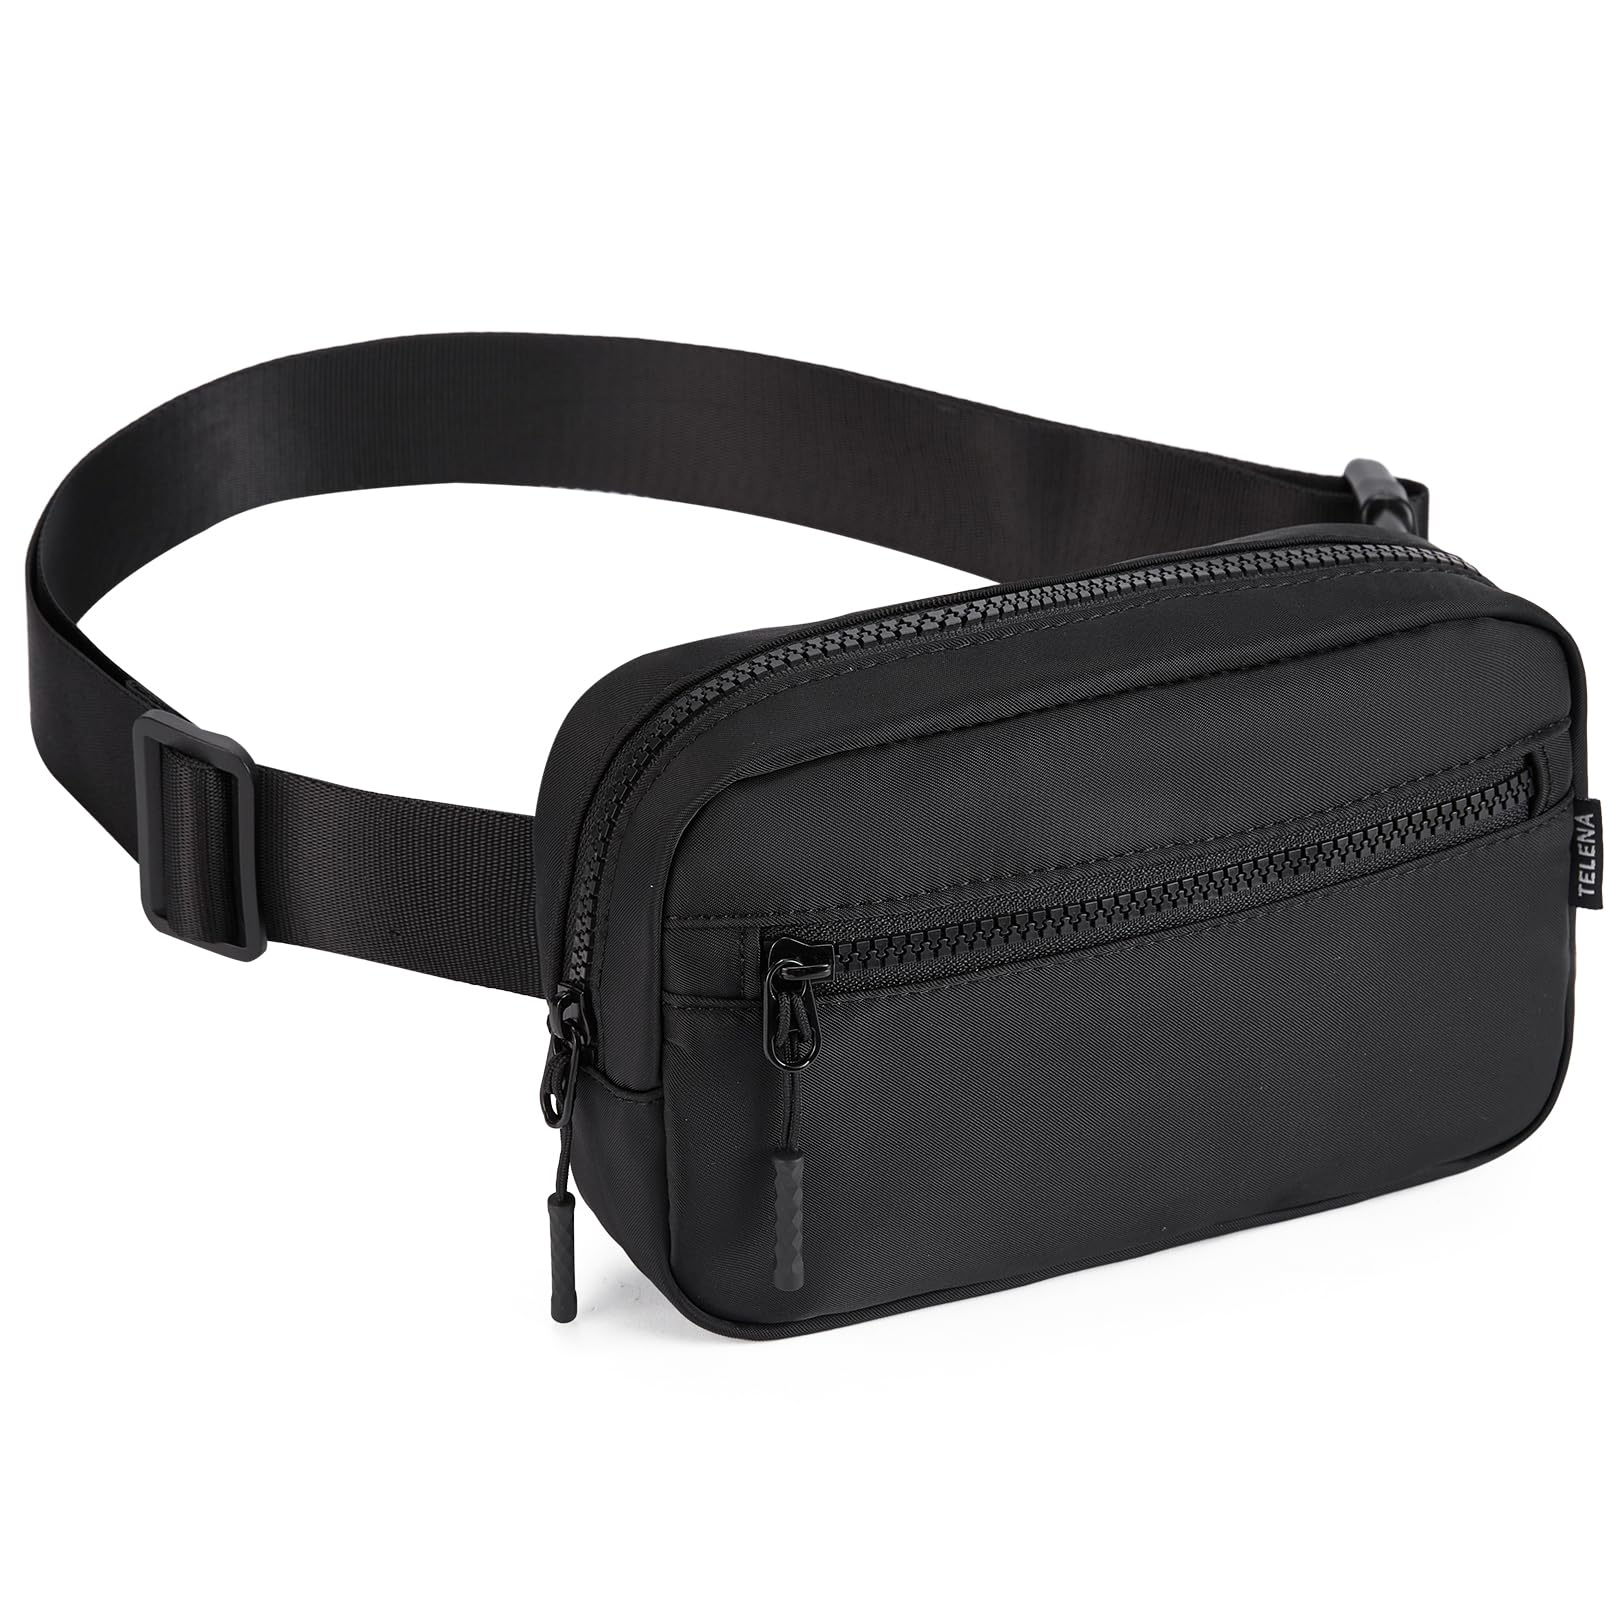 Telena Fanny Packs Crossbody Belt Bag Cross Body Bag Fashionable for Women with Adjustable Strap Black